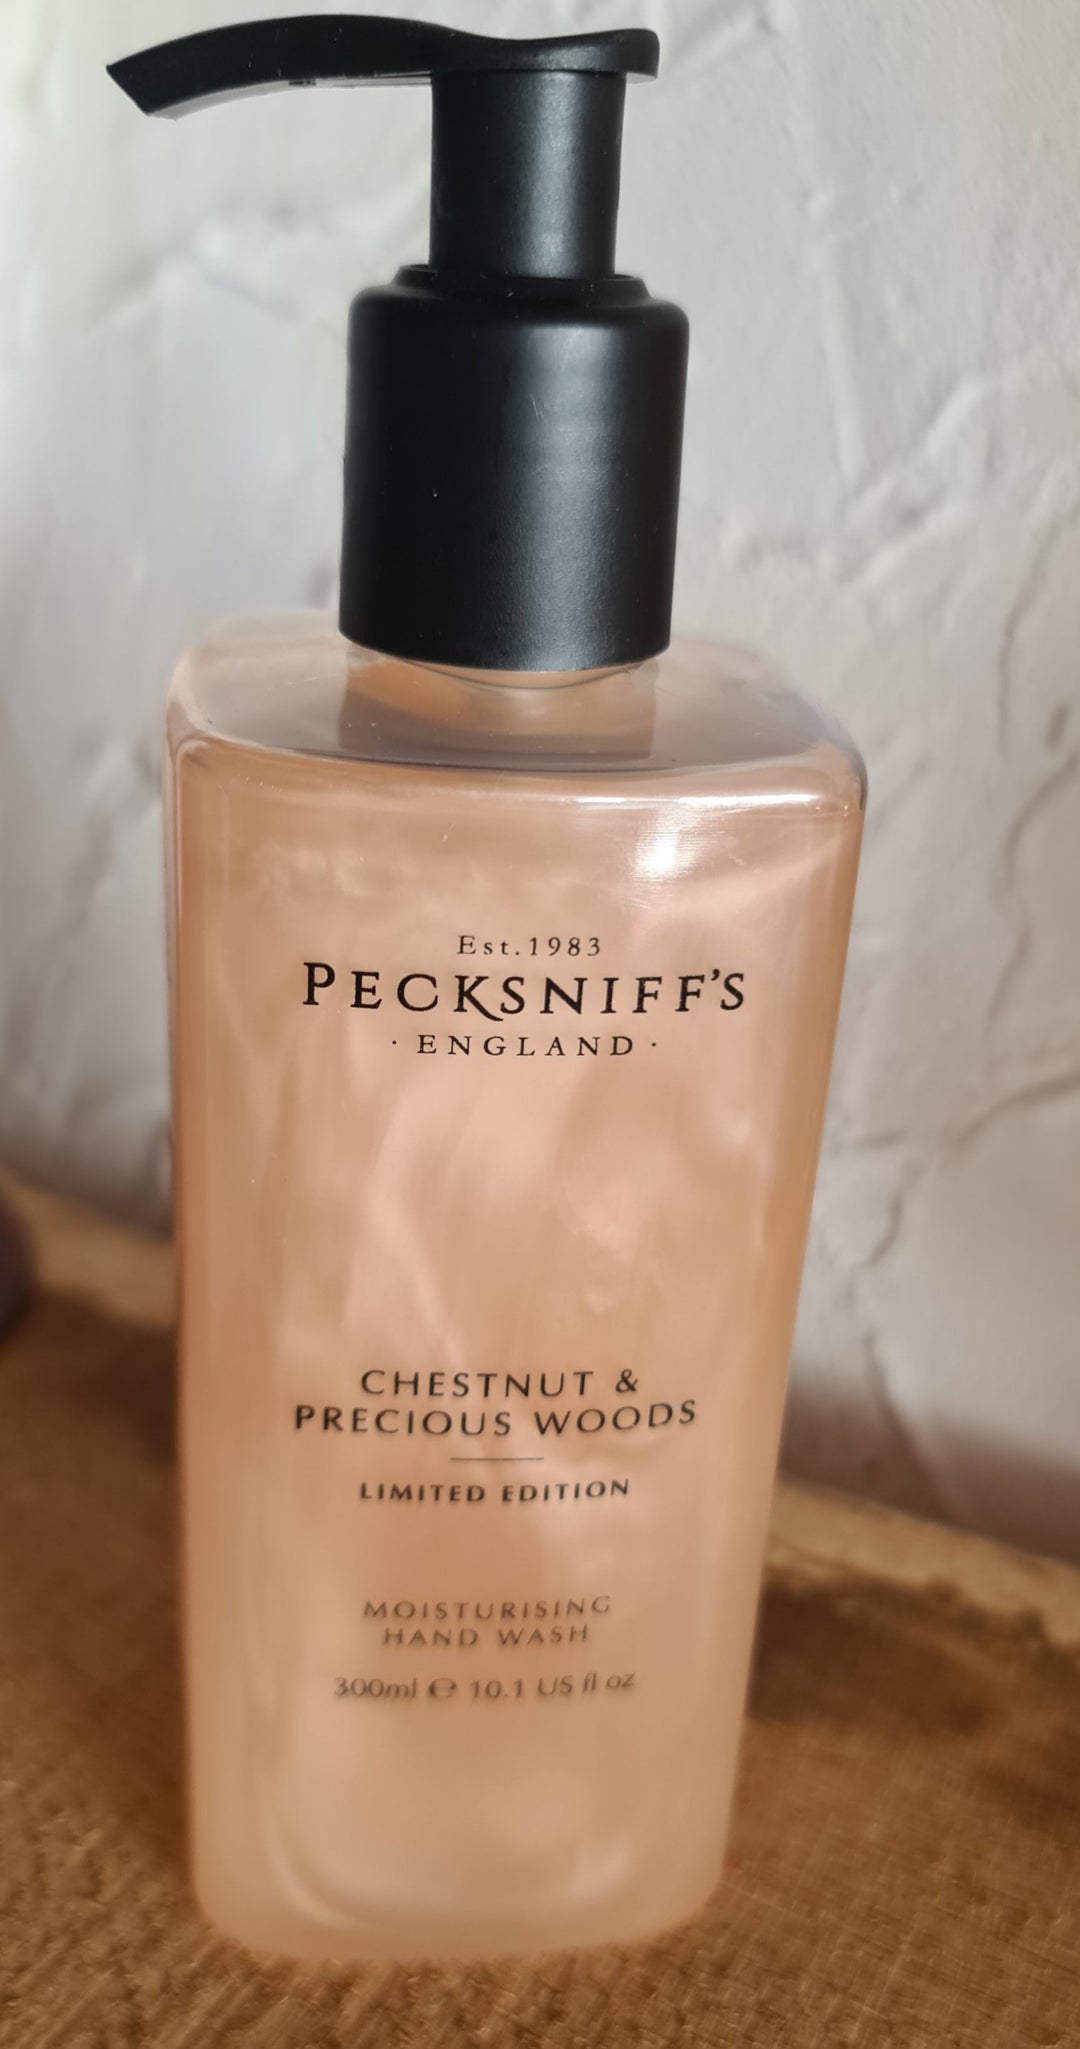 Pecksniff's Chestnut & Precious Woods, Moisturizing Hand Wash 300 ml